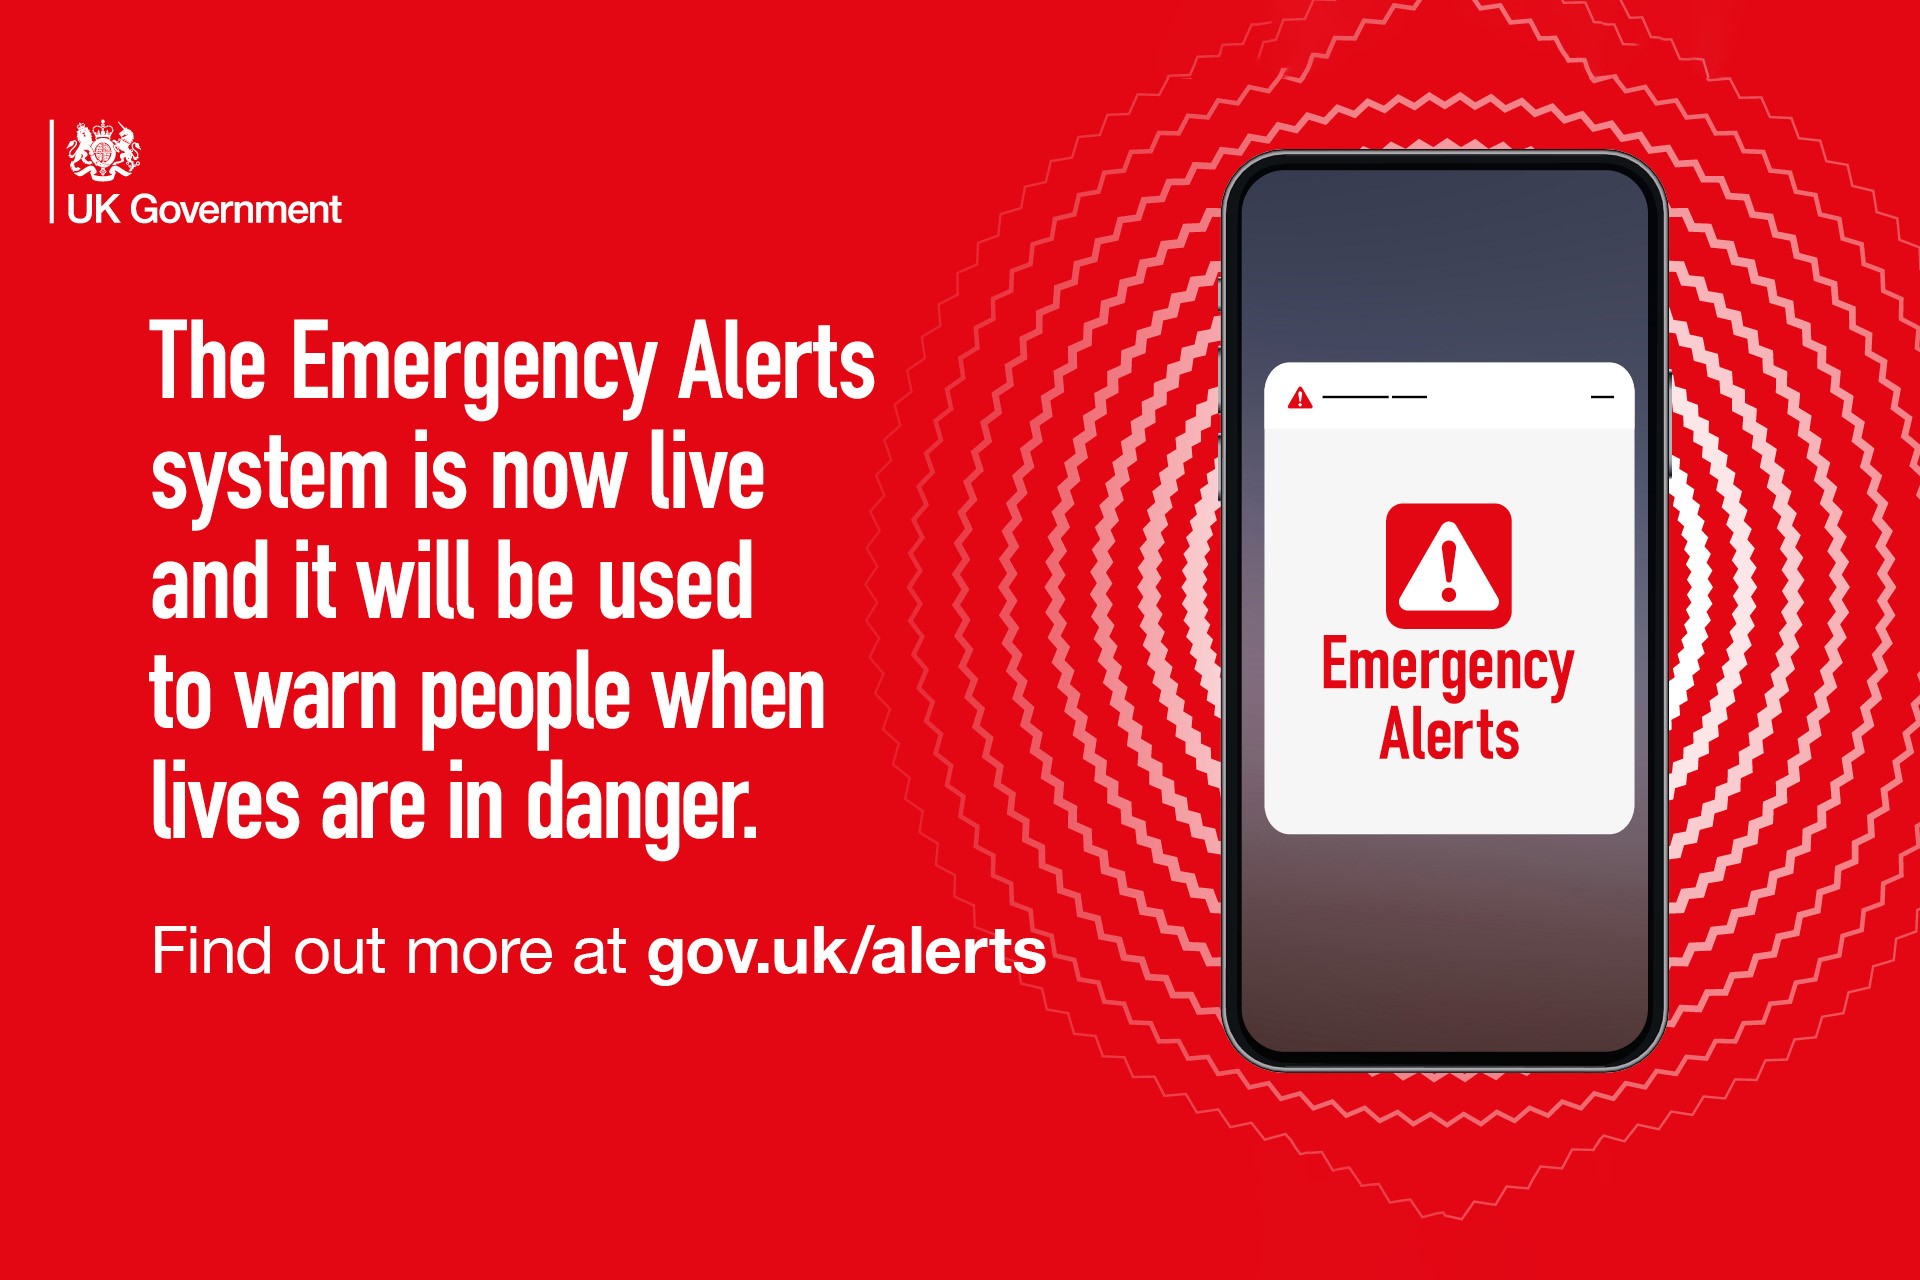 Launch of life-saving public emergency alerts 